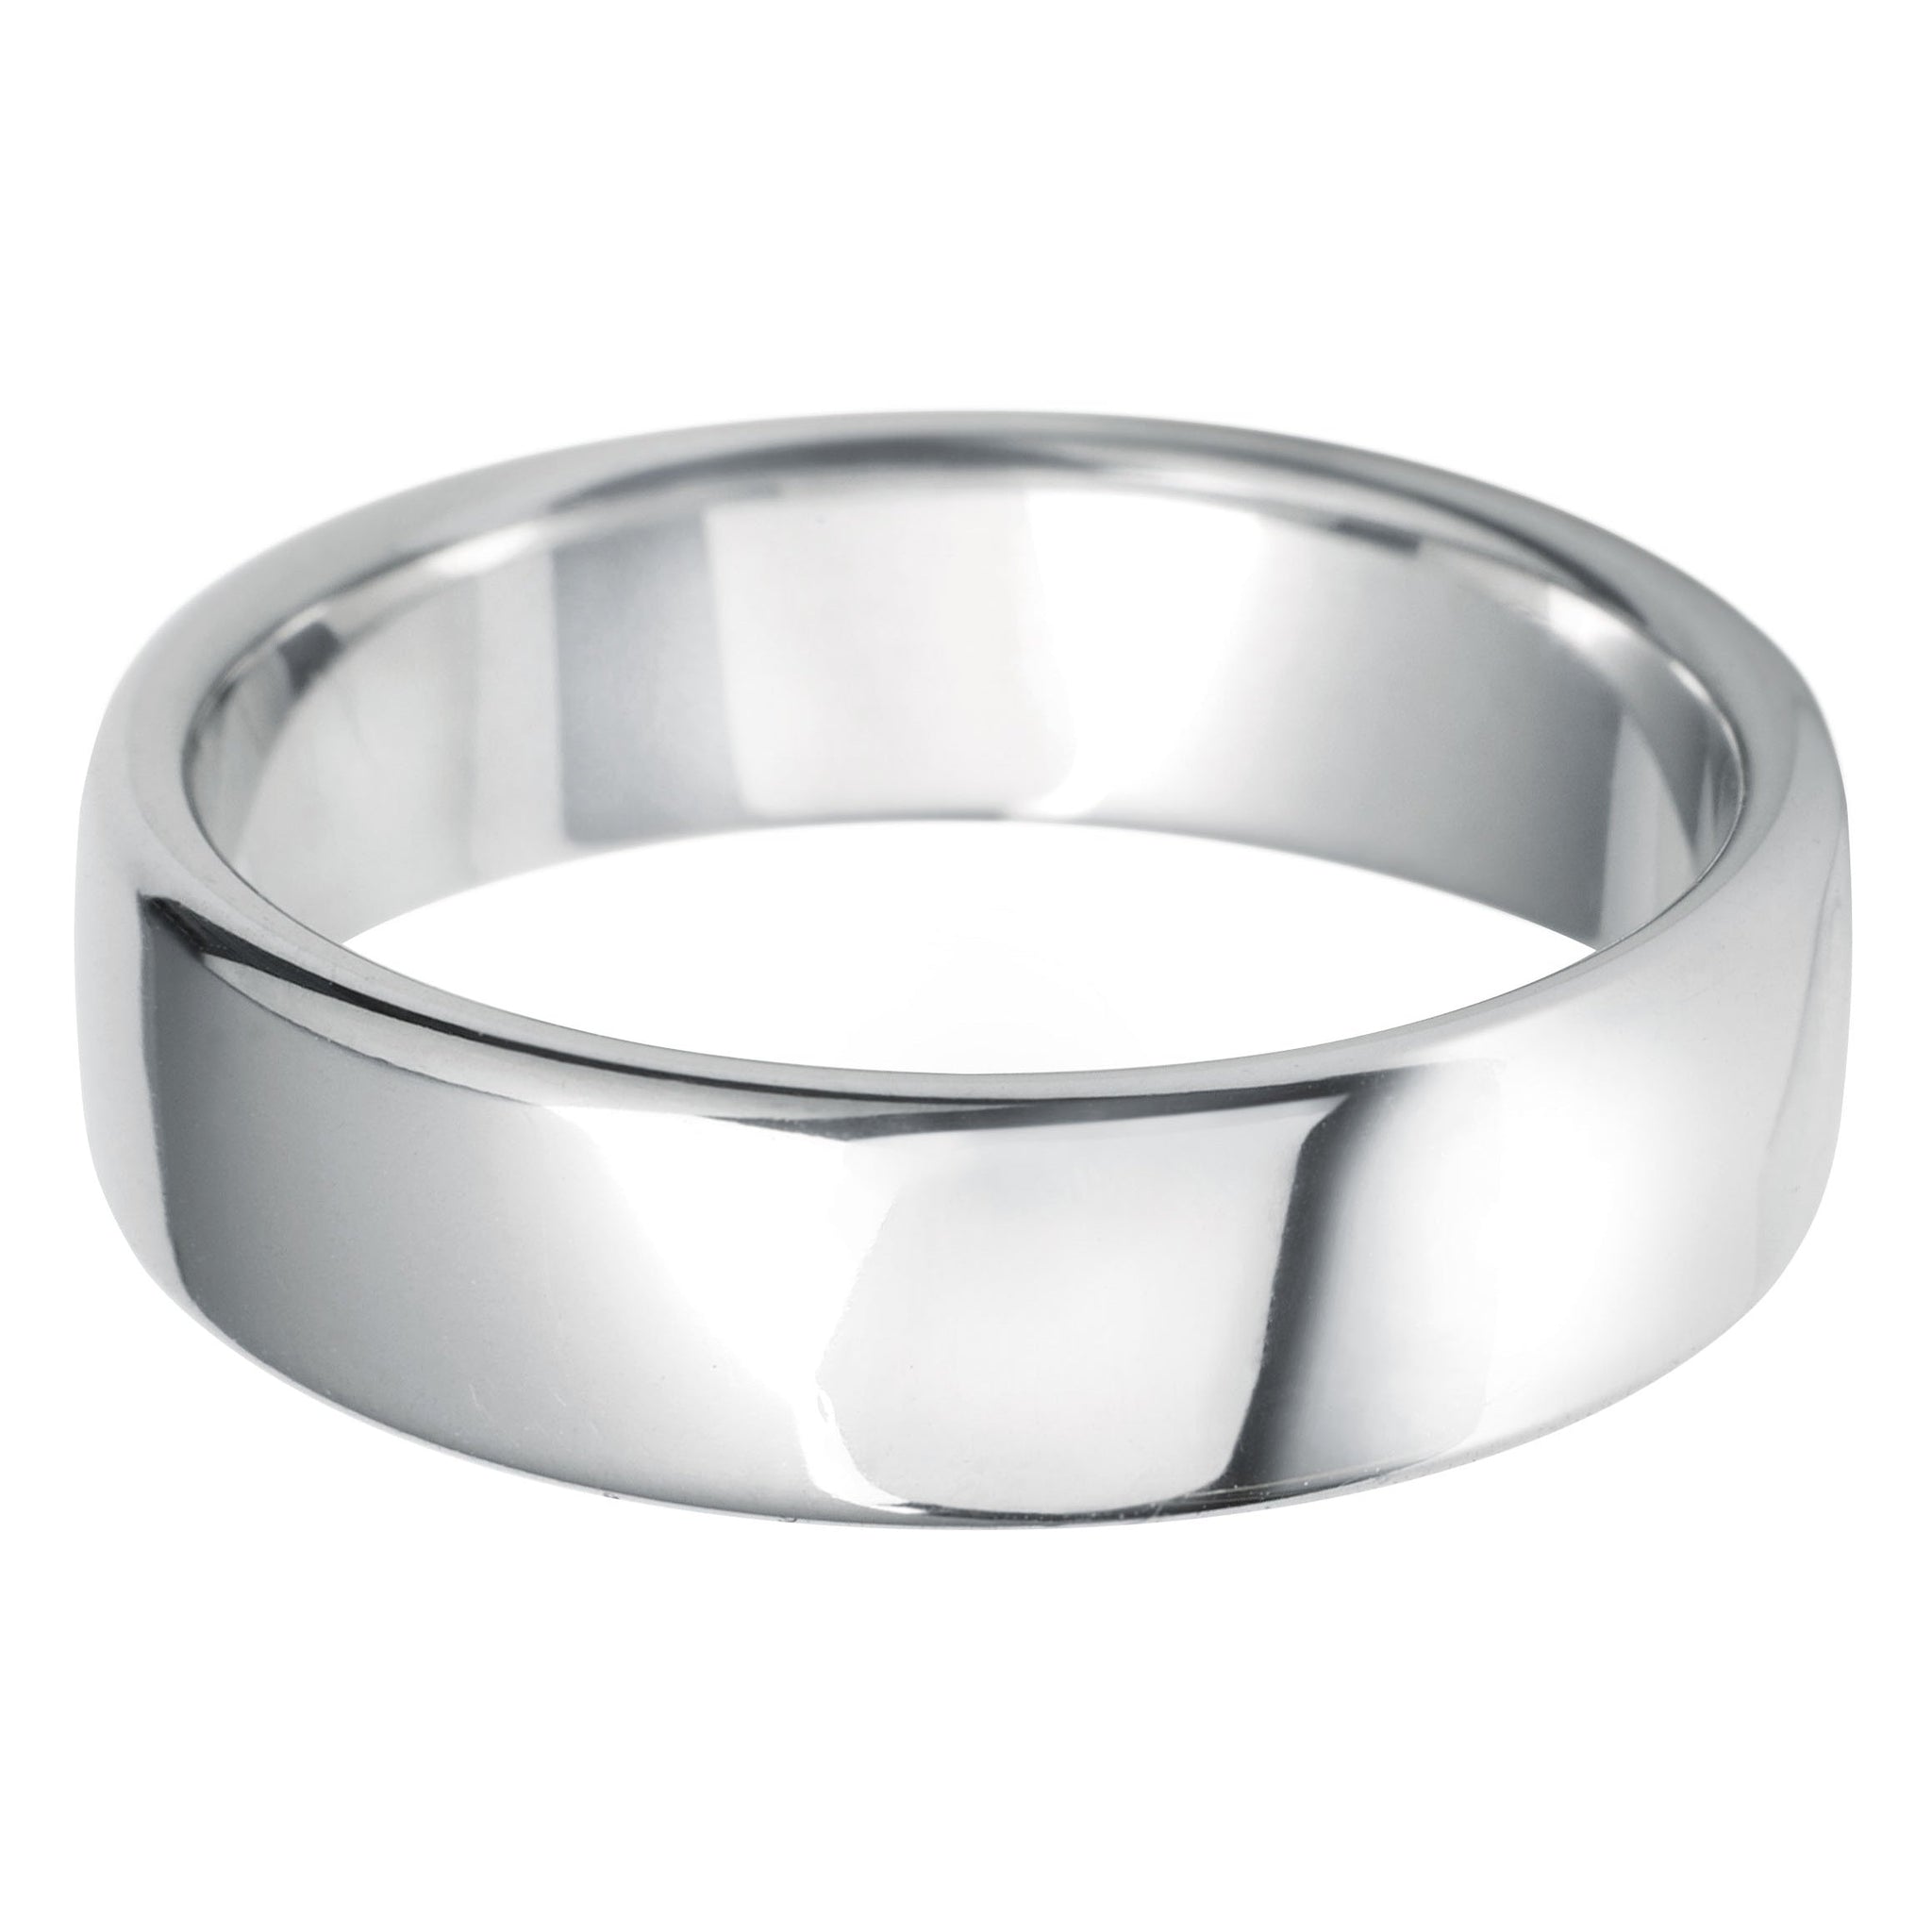 6mm Rounded Flat Medium Weight Wedding Ring